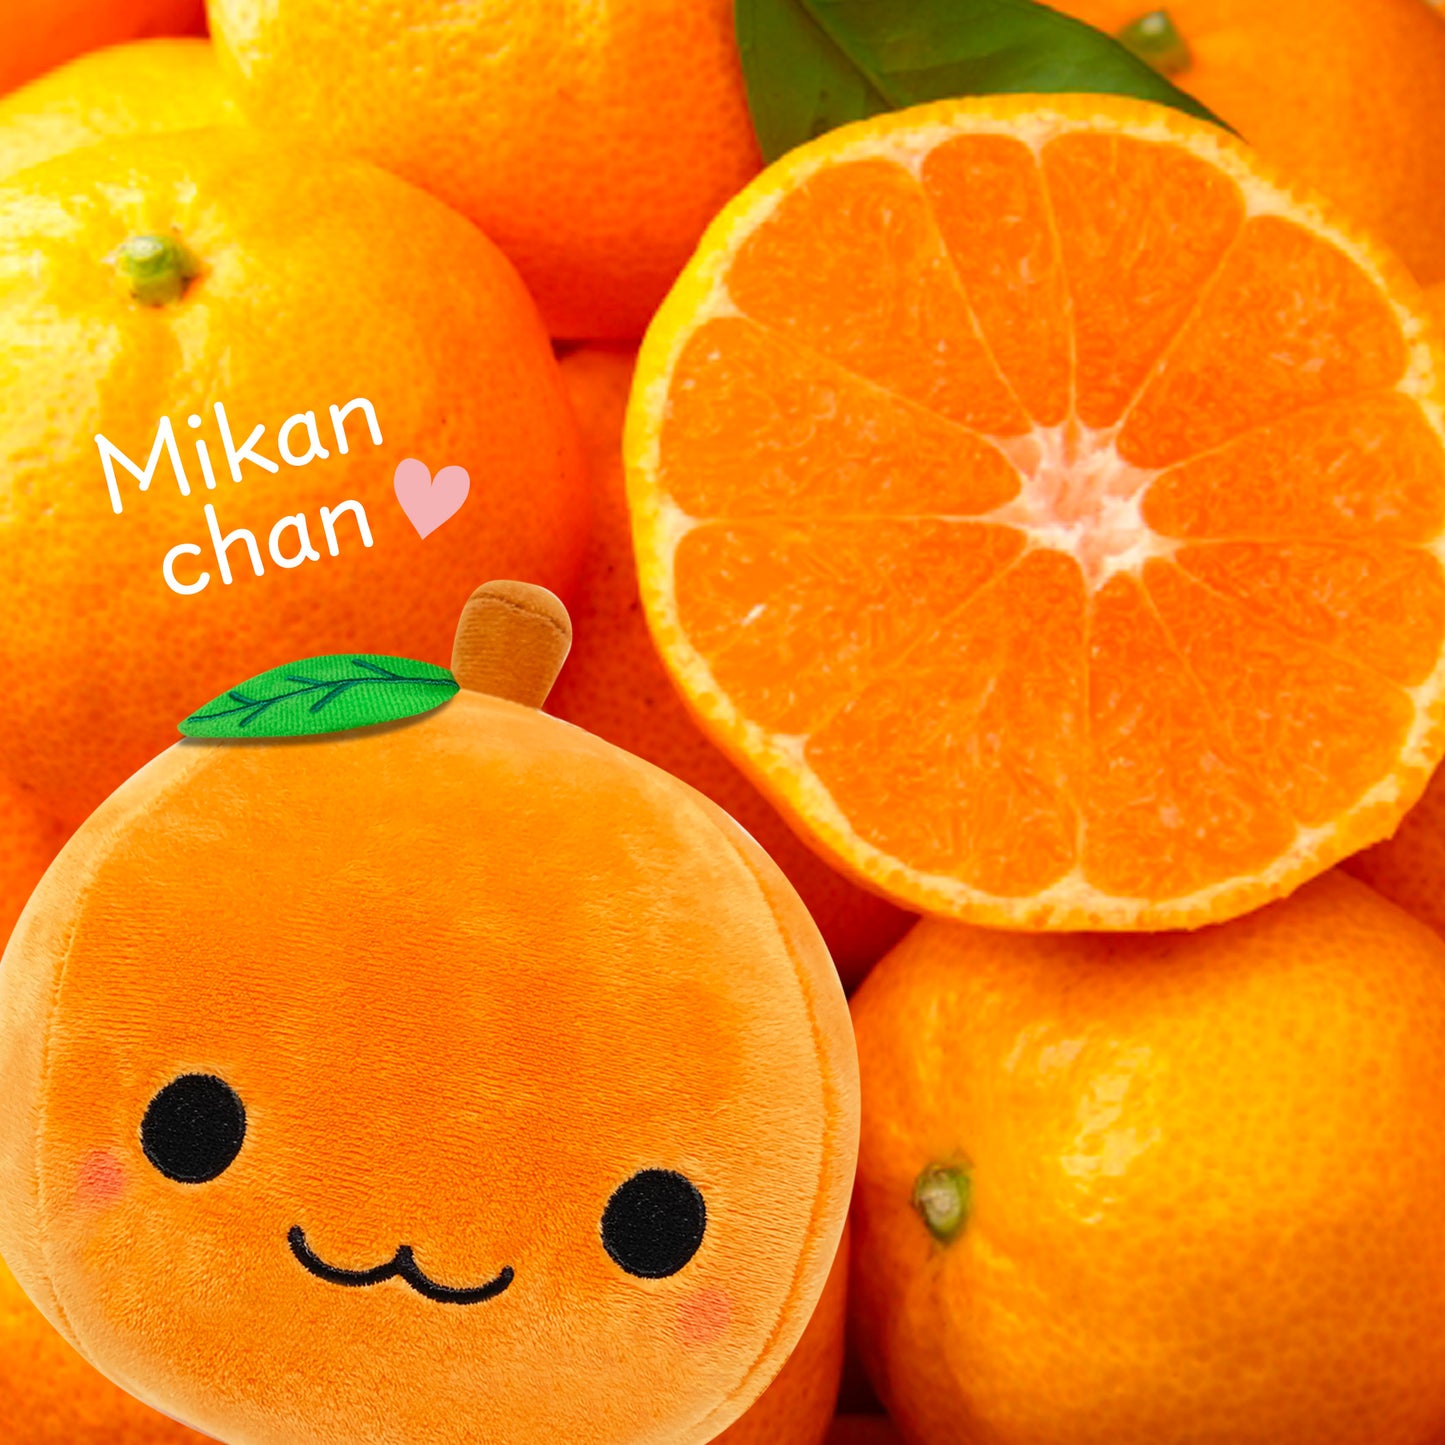 Instagram of Orange Fruit Stuffed Toy Mikanchan Orange